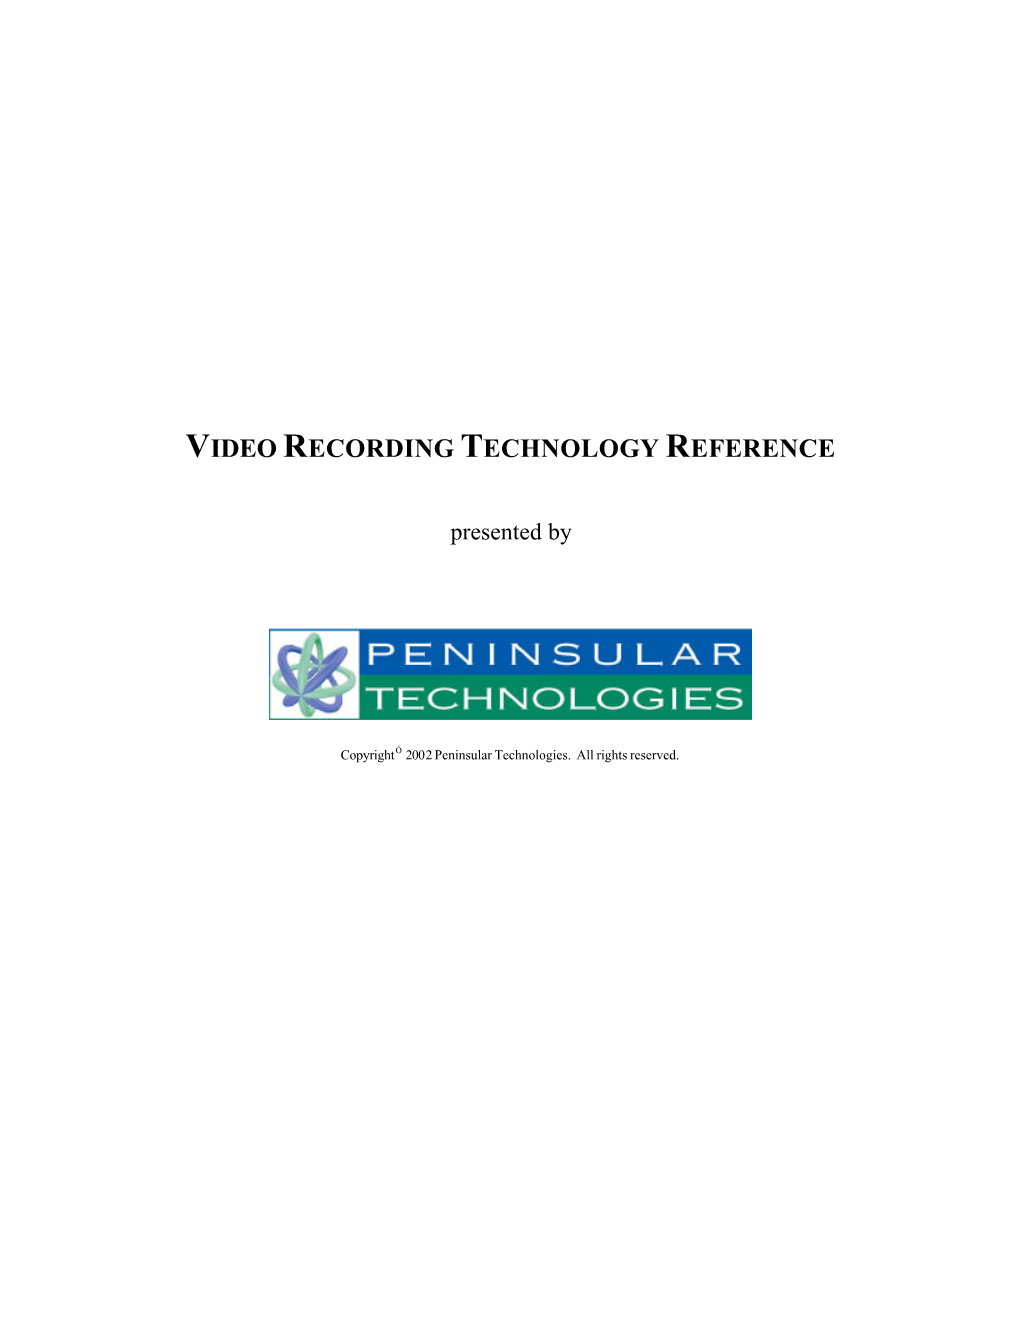 Digital Video Technology Reference.Doc V2.0 Printed on 5/7/02 3:08 PM Copyrightó 2002 Peninsular Technologies